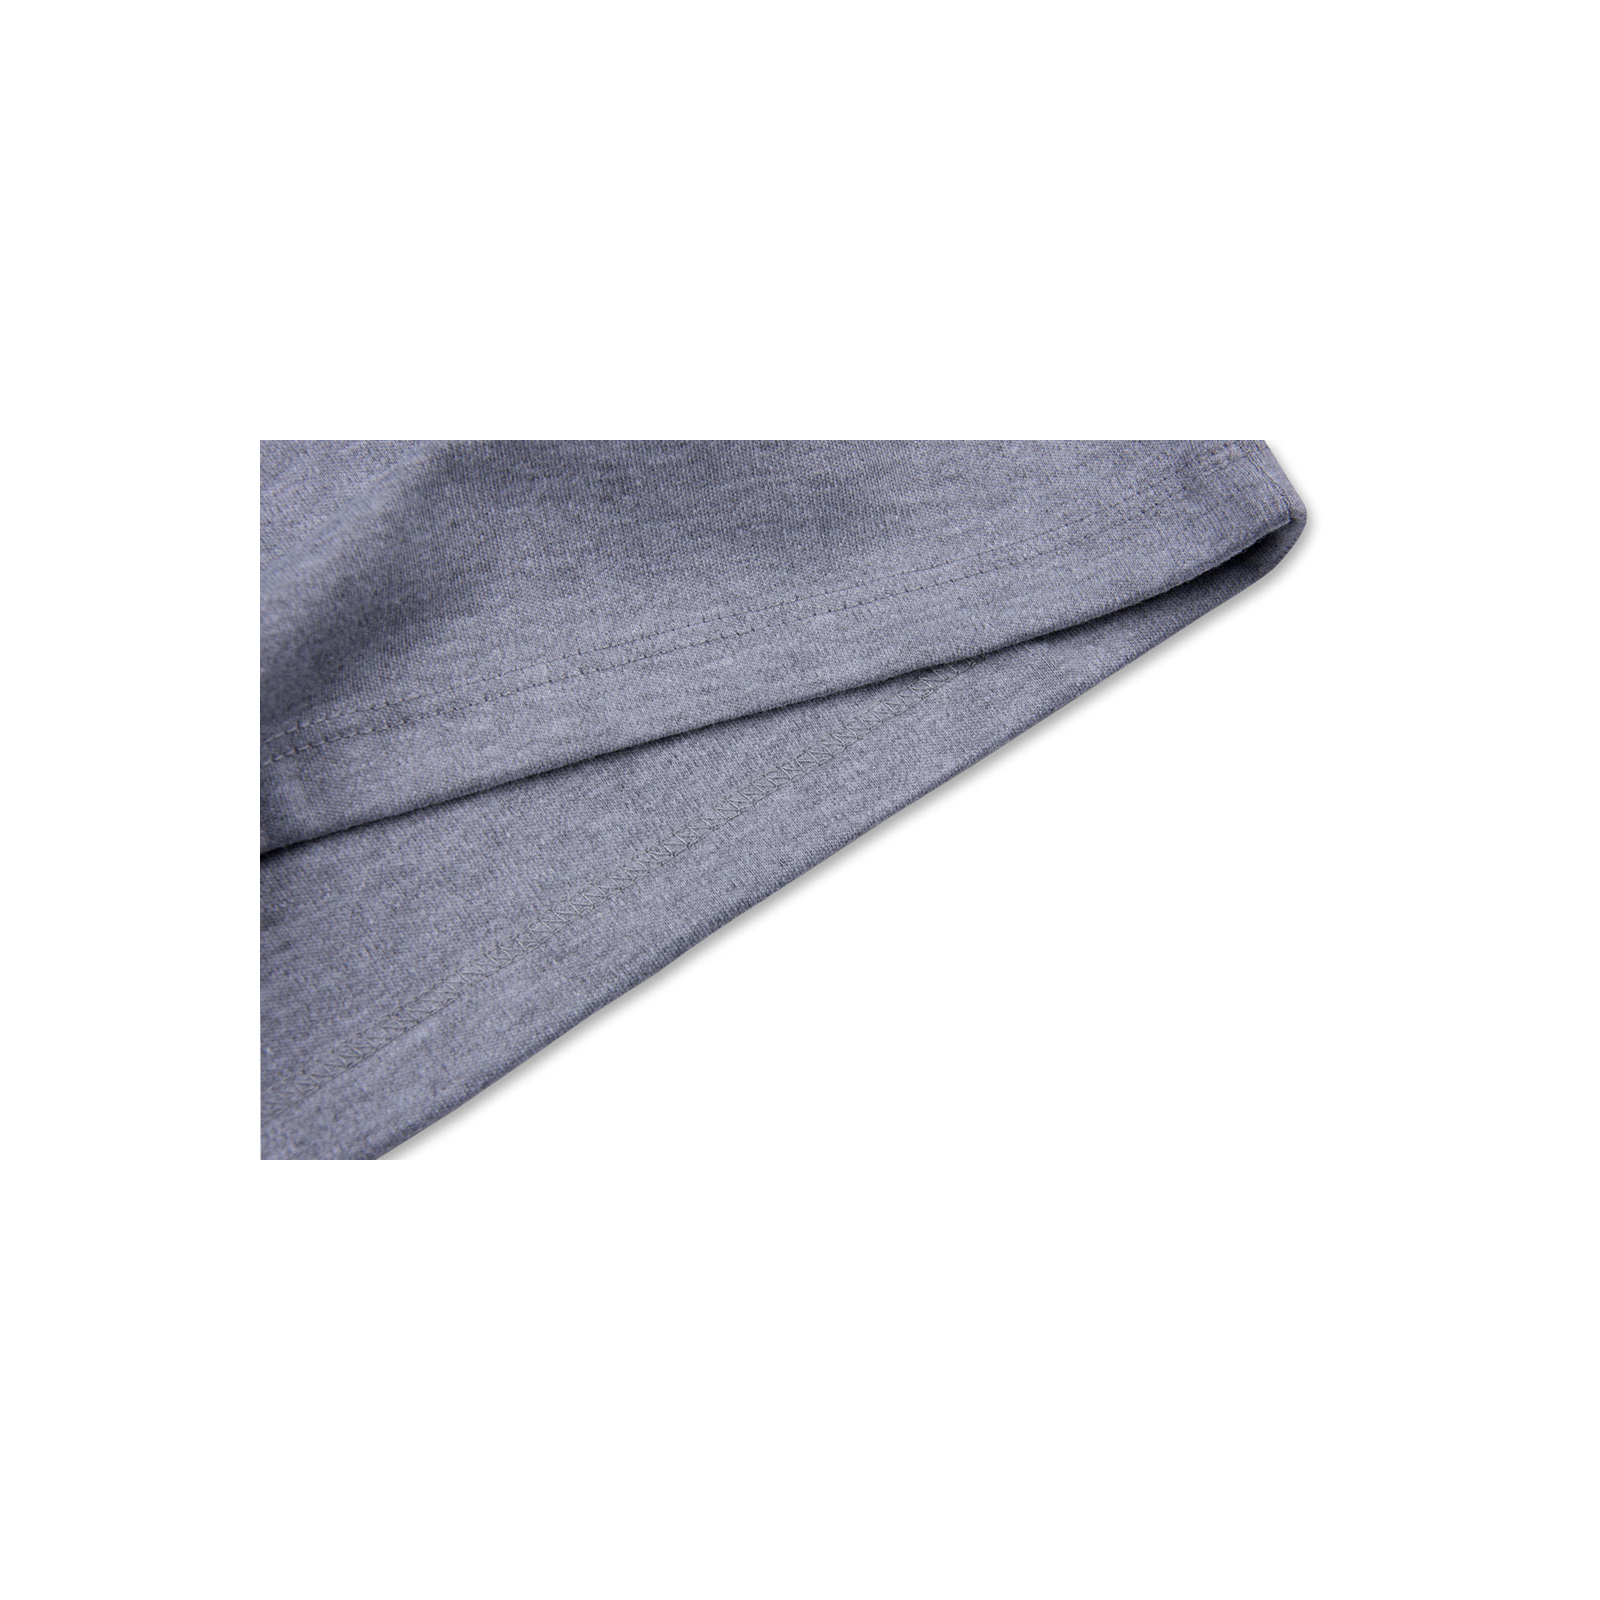 Кофта Lovetti водолазка серая меланжевая (1012-116-gray) изображение 5